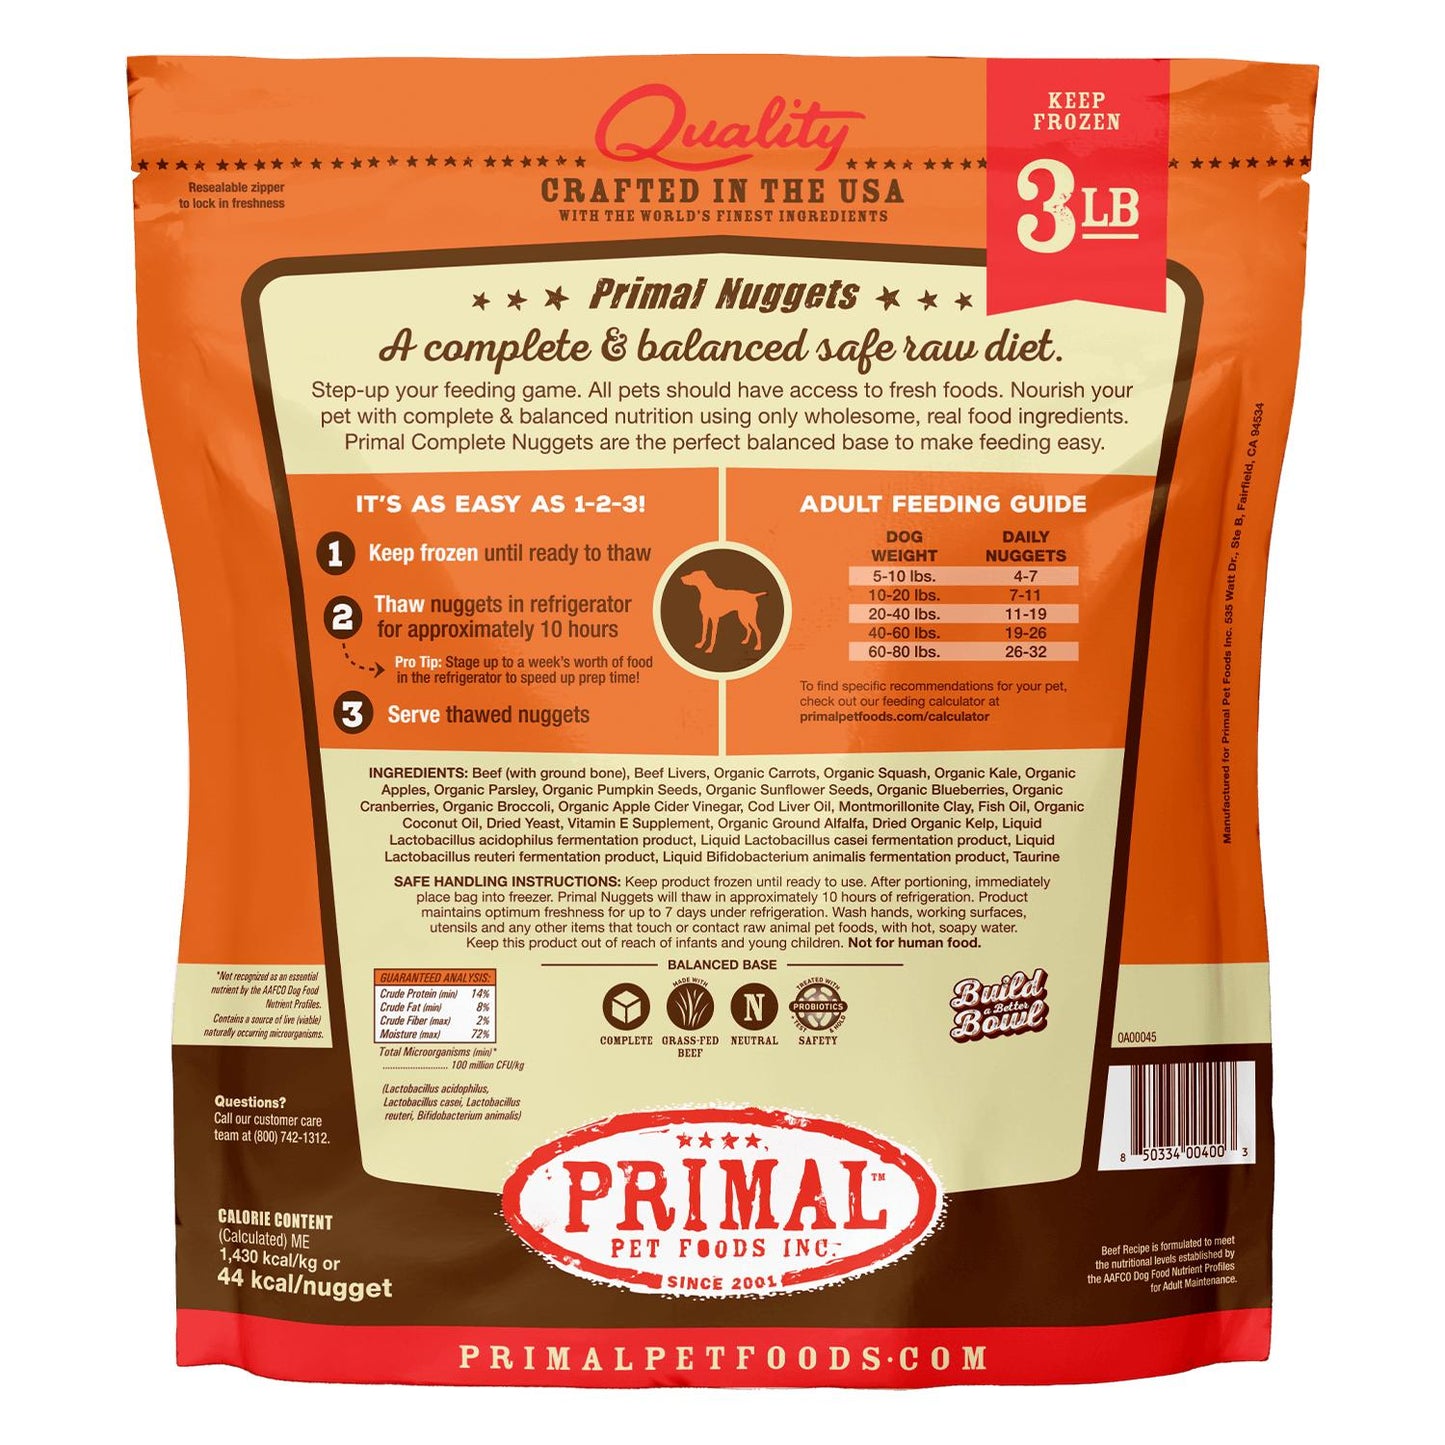 Primal Raw Frozen Nuggets Beef Formula Dog Food, 3-lb